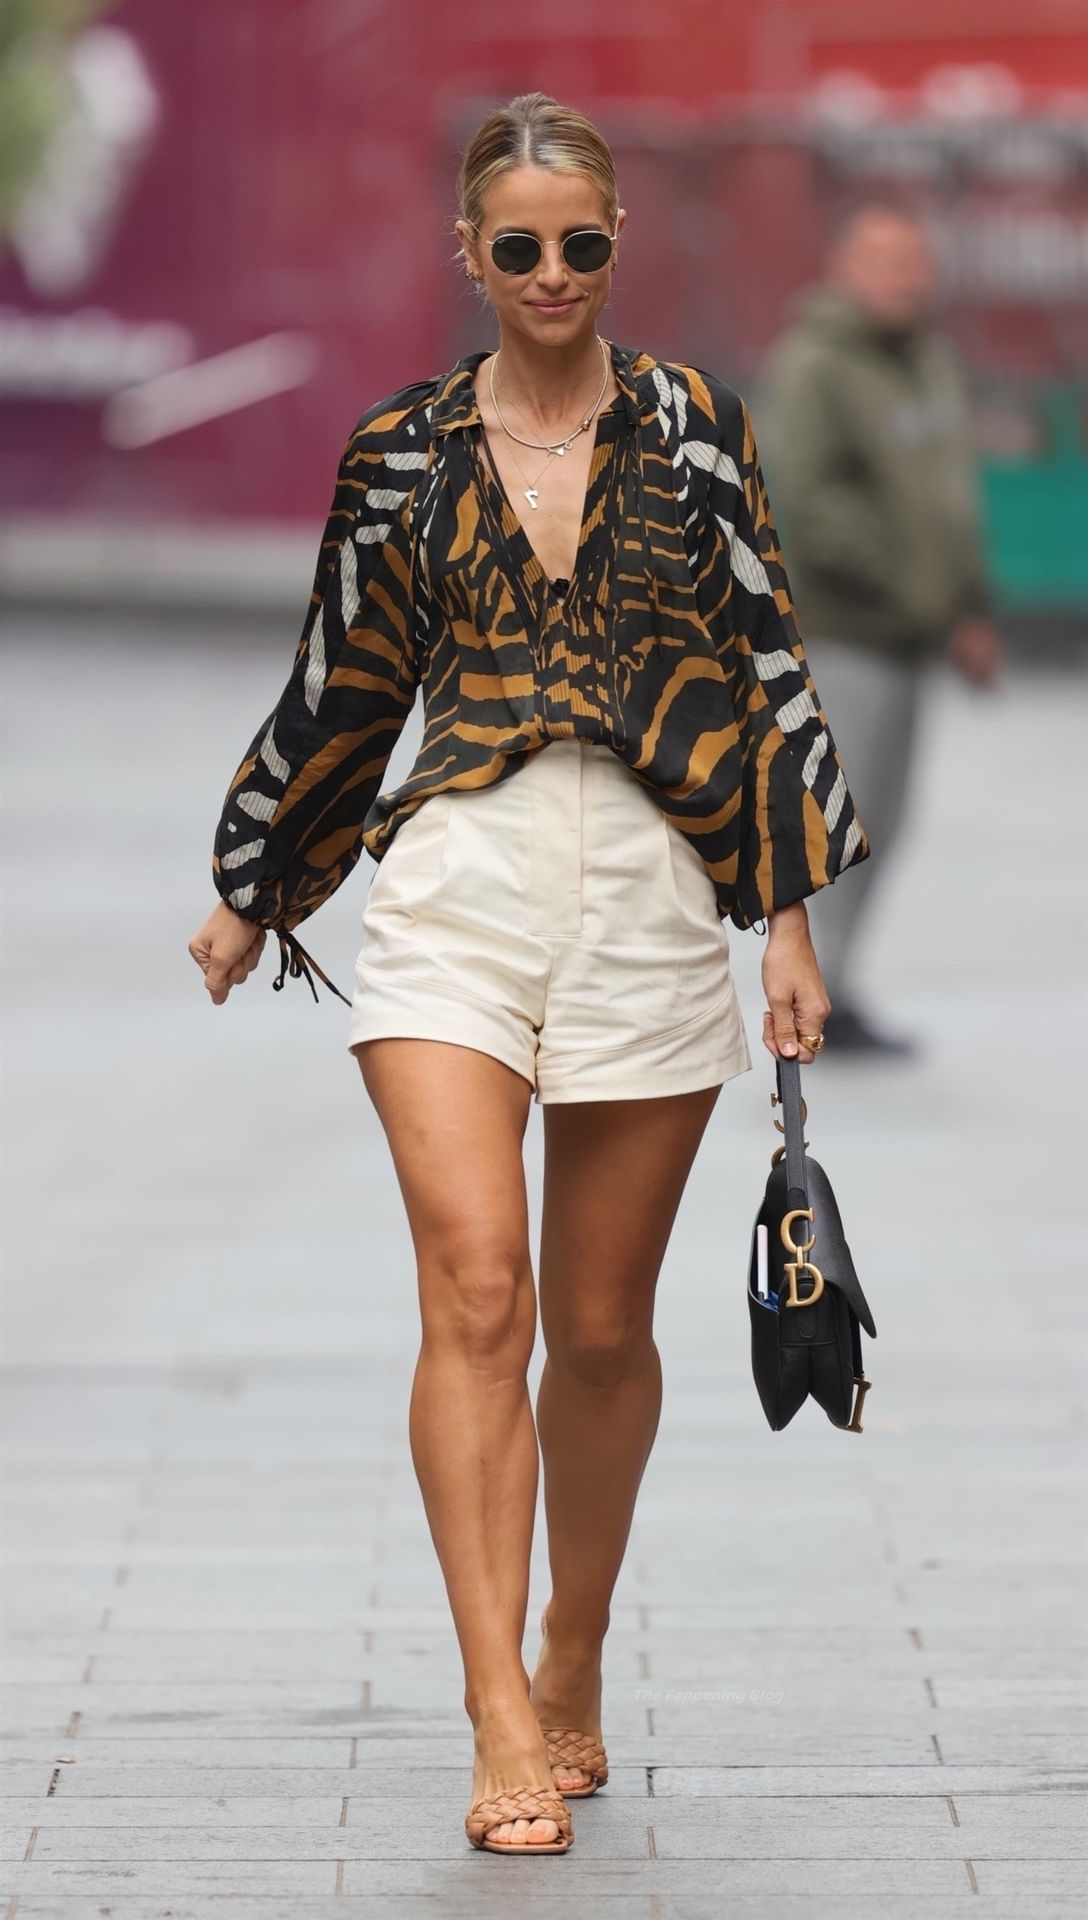 Leggy Vogue Williams Looks Hot in London (58 Photos)